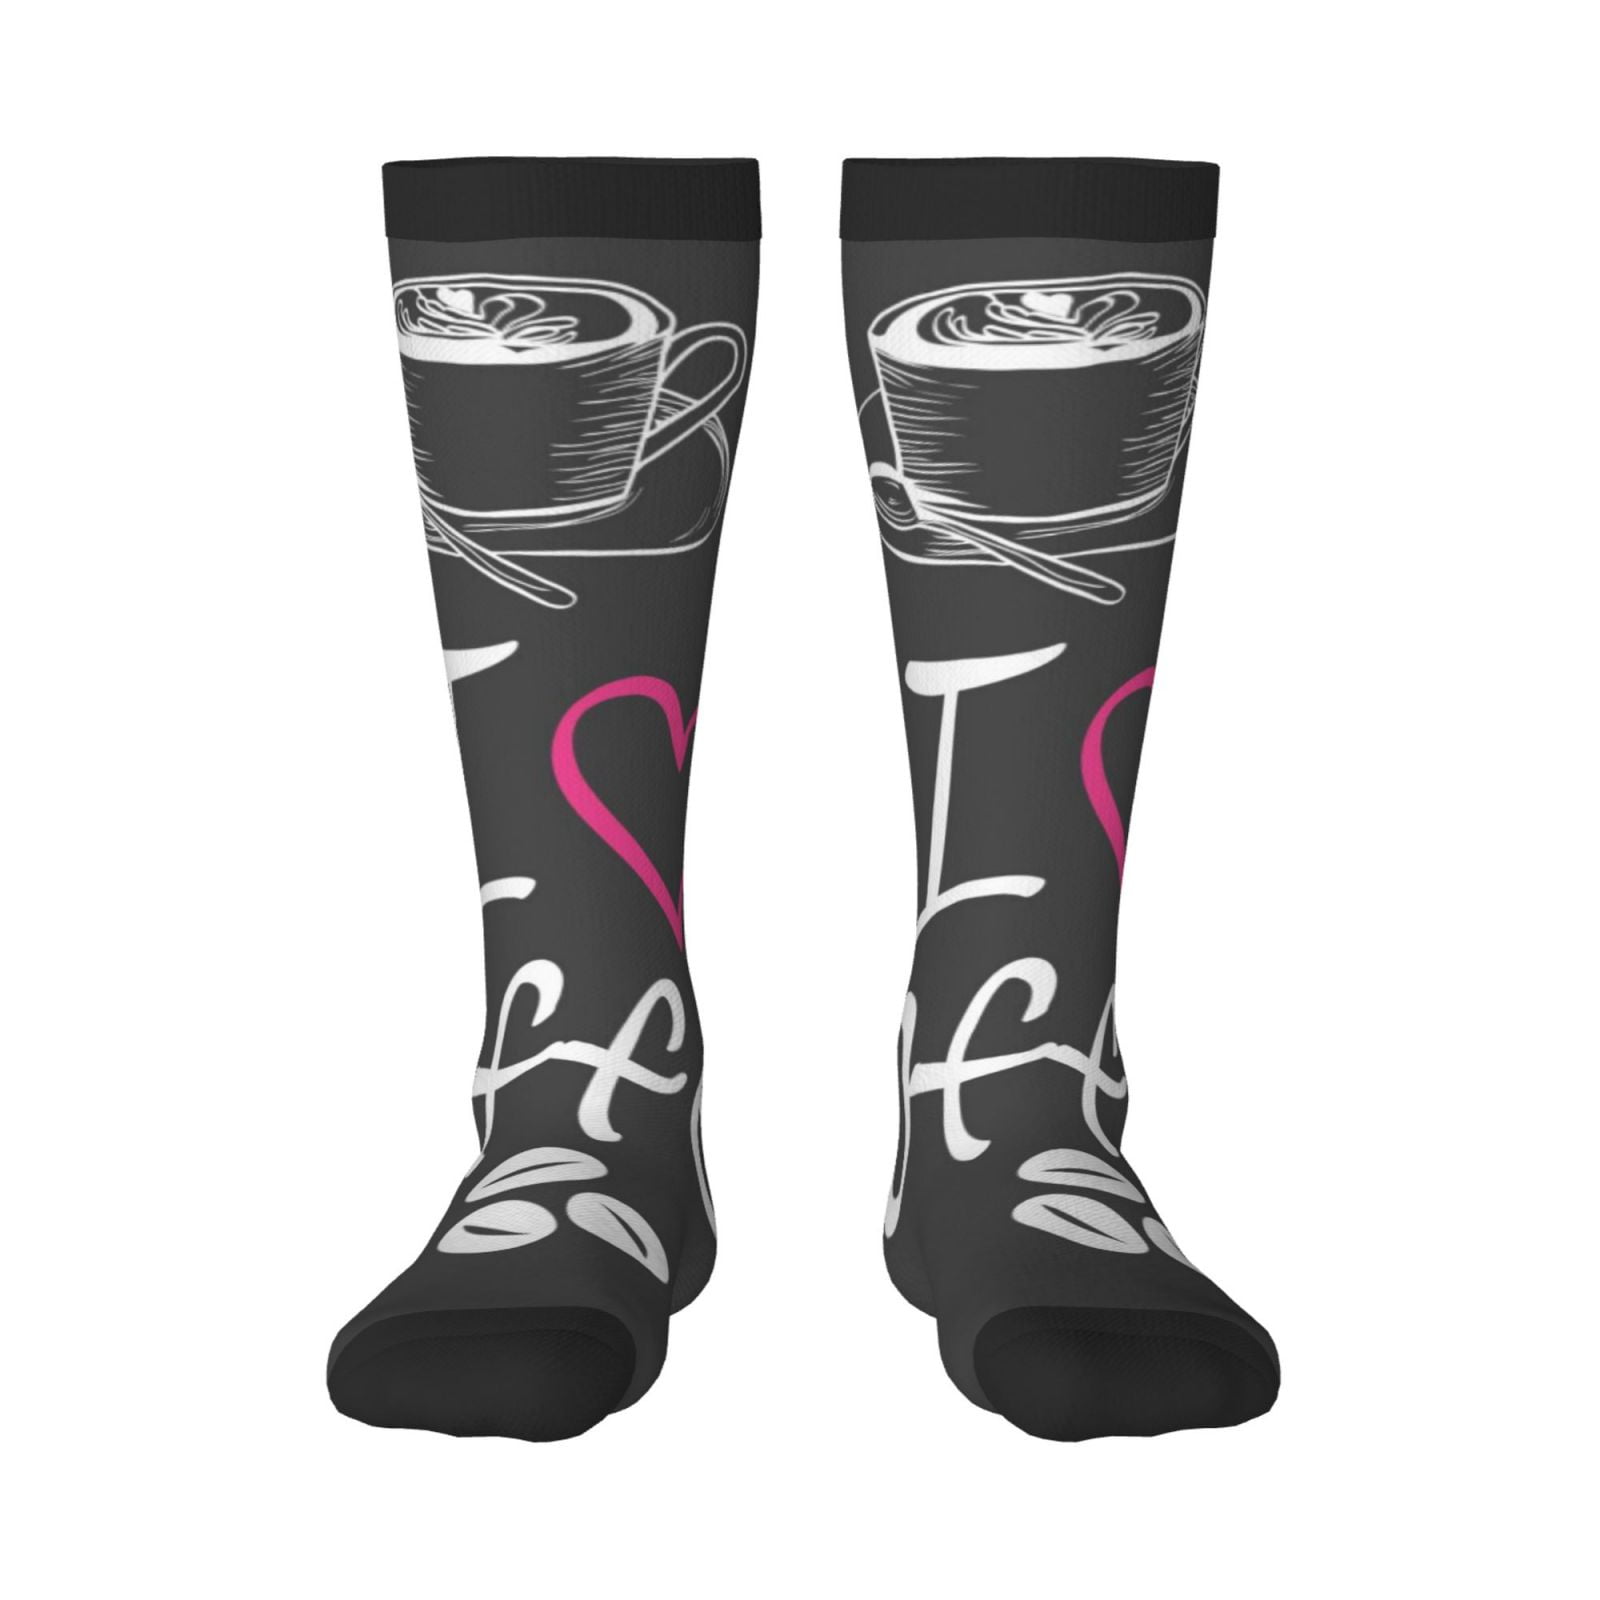 Easygdp I Love Coffee Soccer Socks Sport Knee High Socks Calf ...